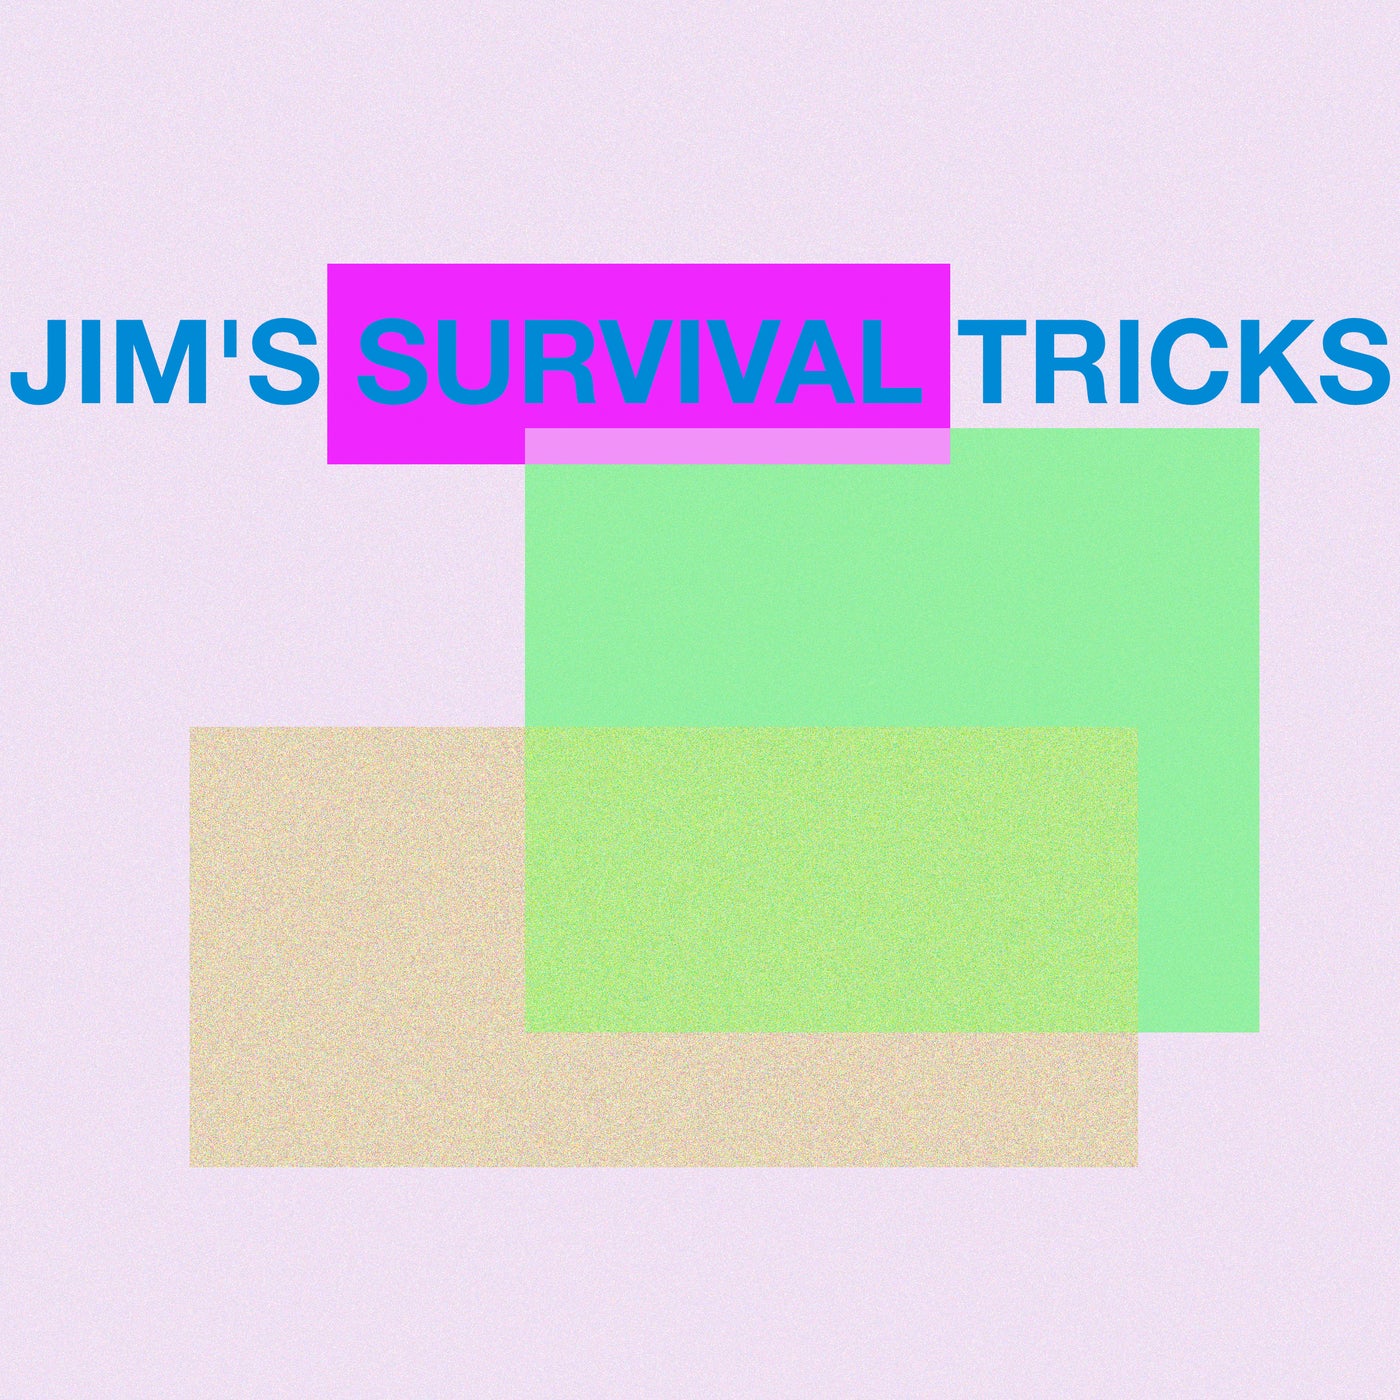 Jim's Survival Tricks